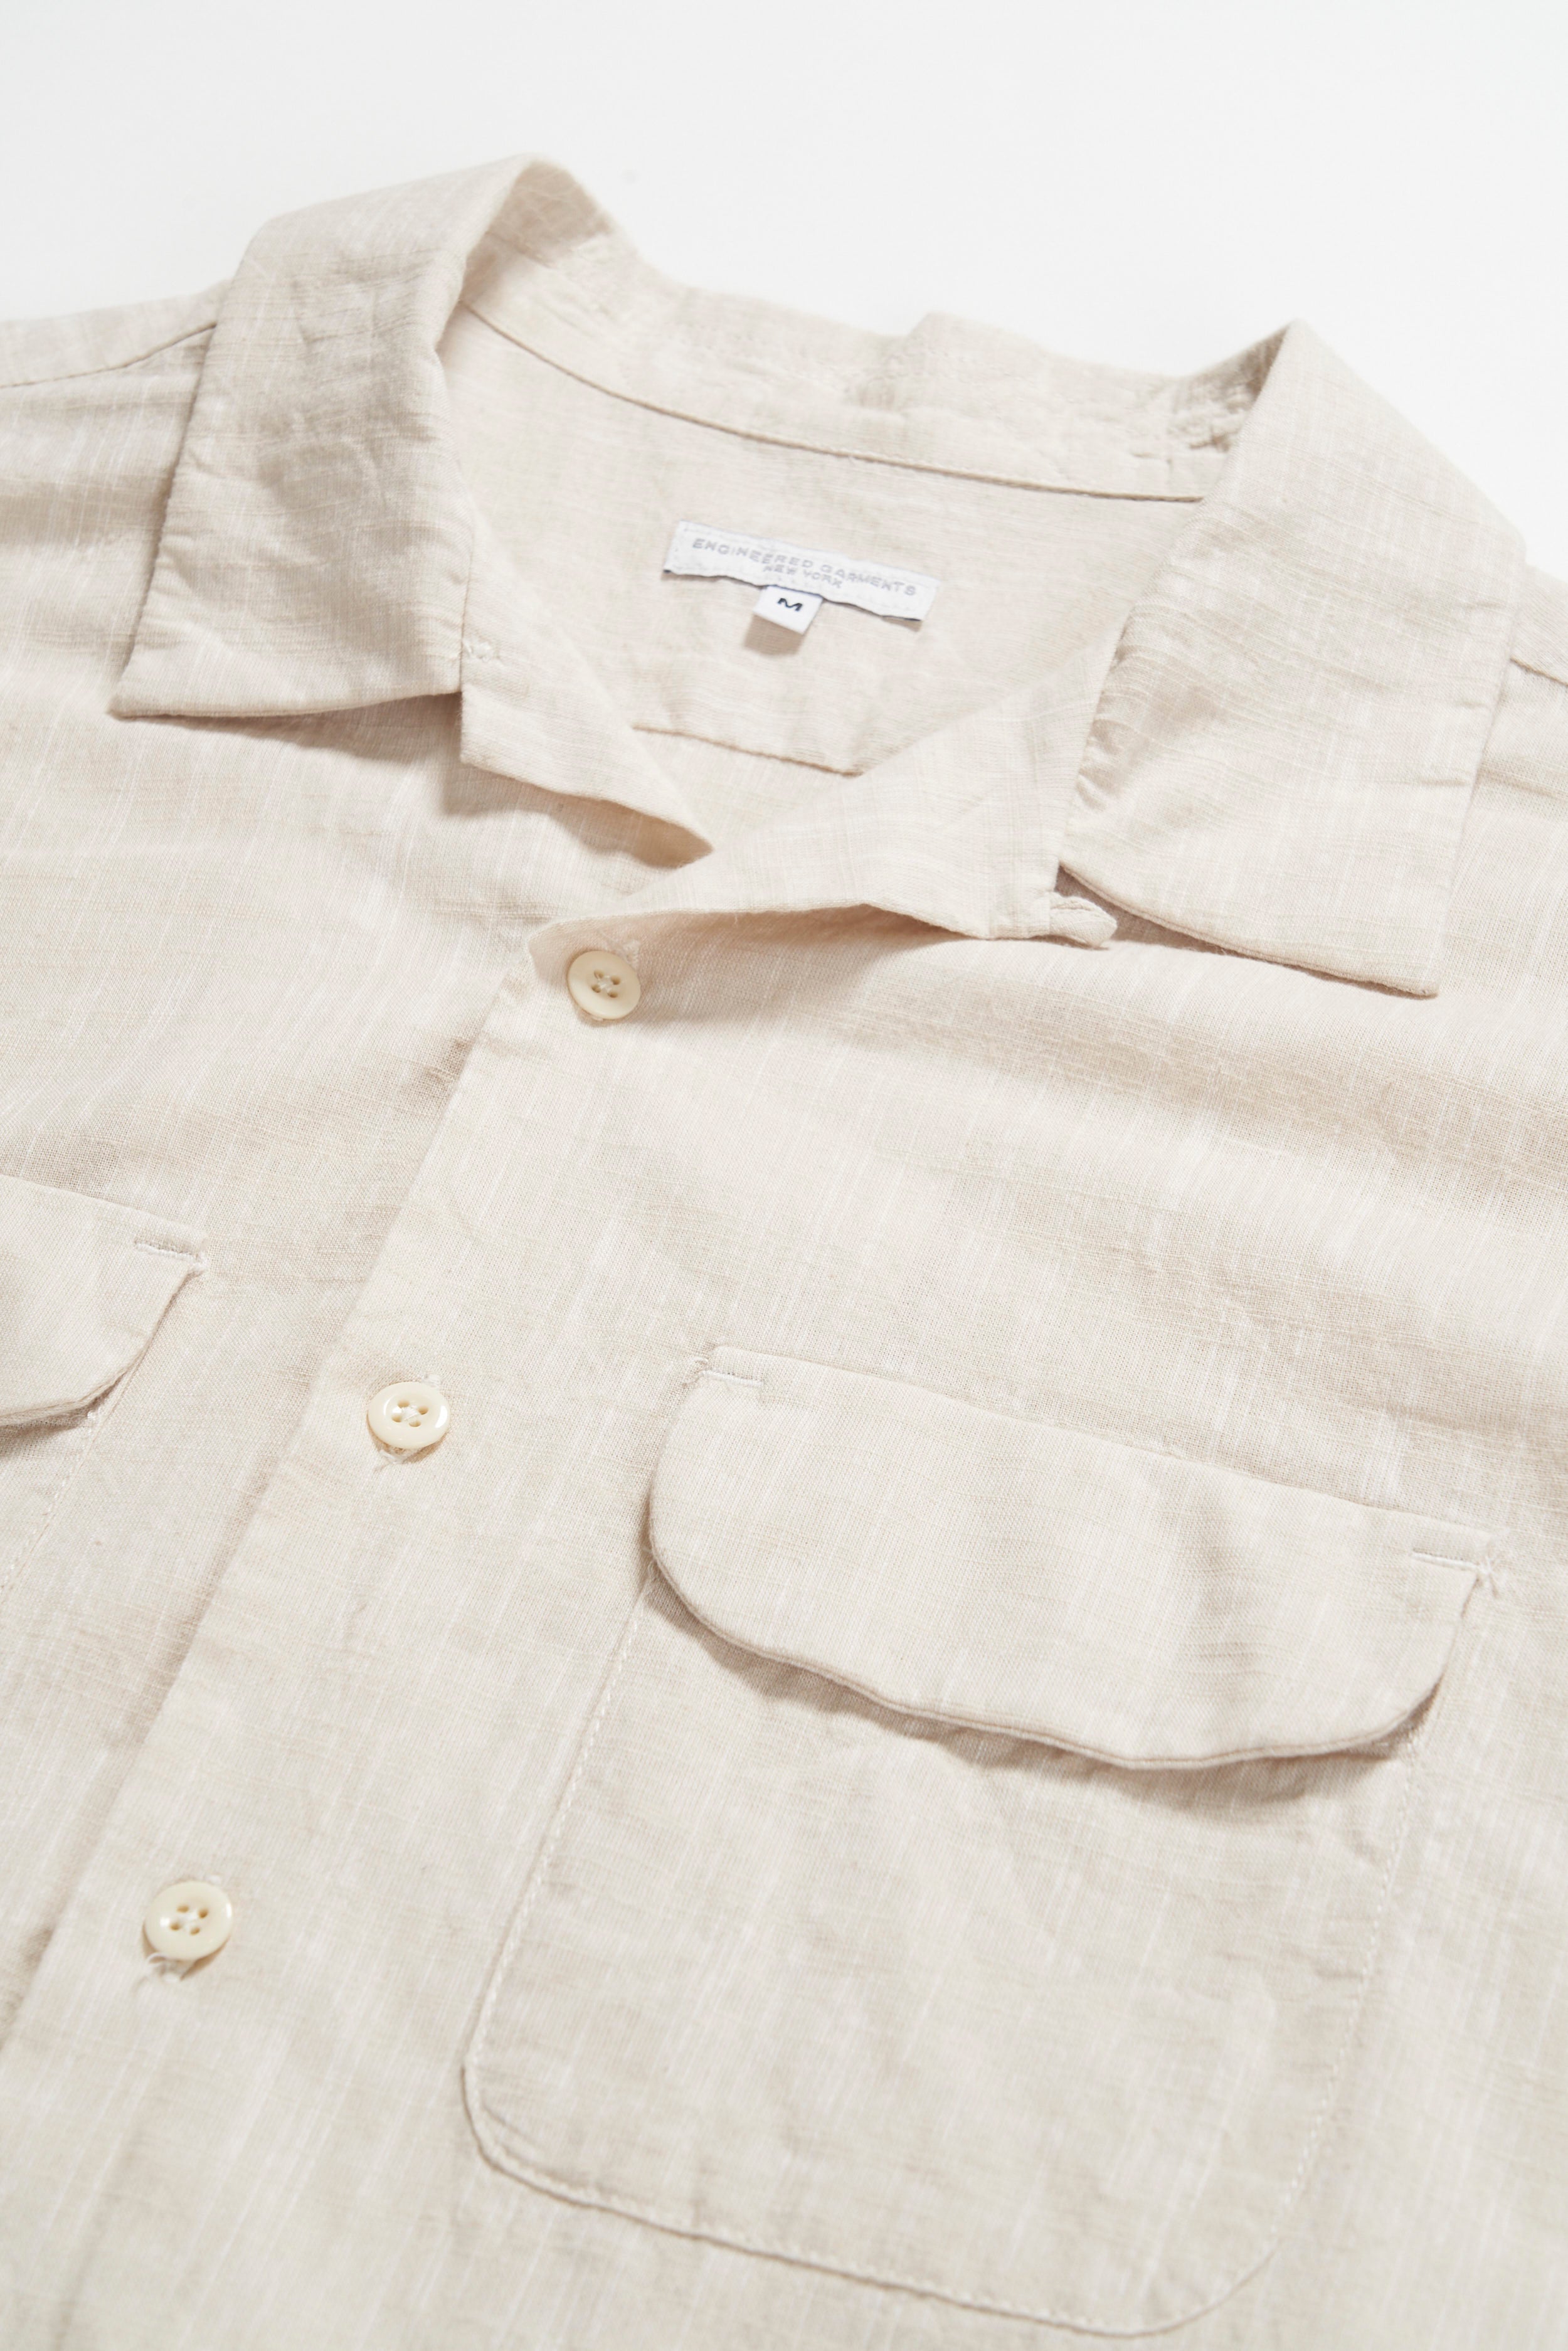 Classic Shirt - Beige Cotton Slab